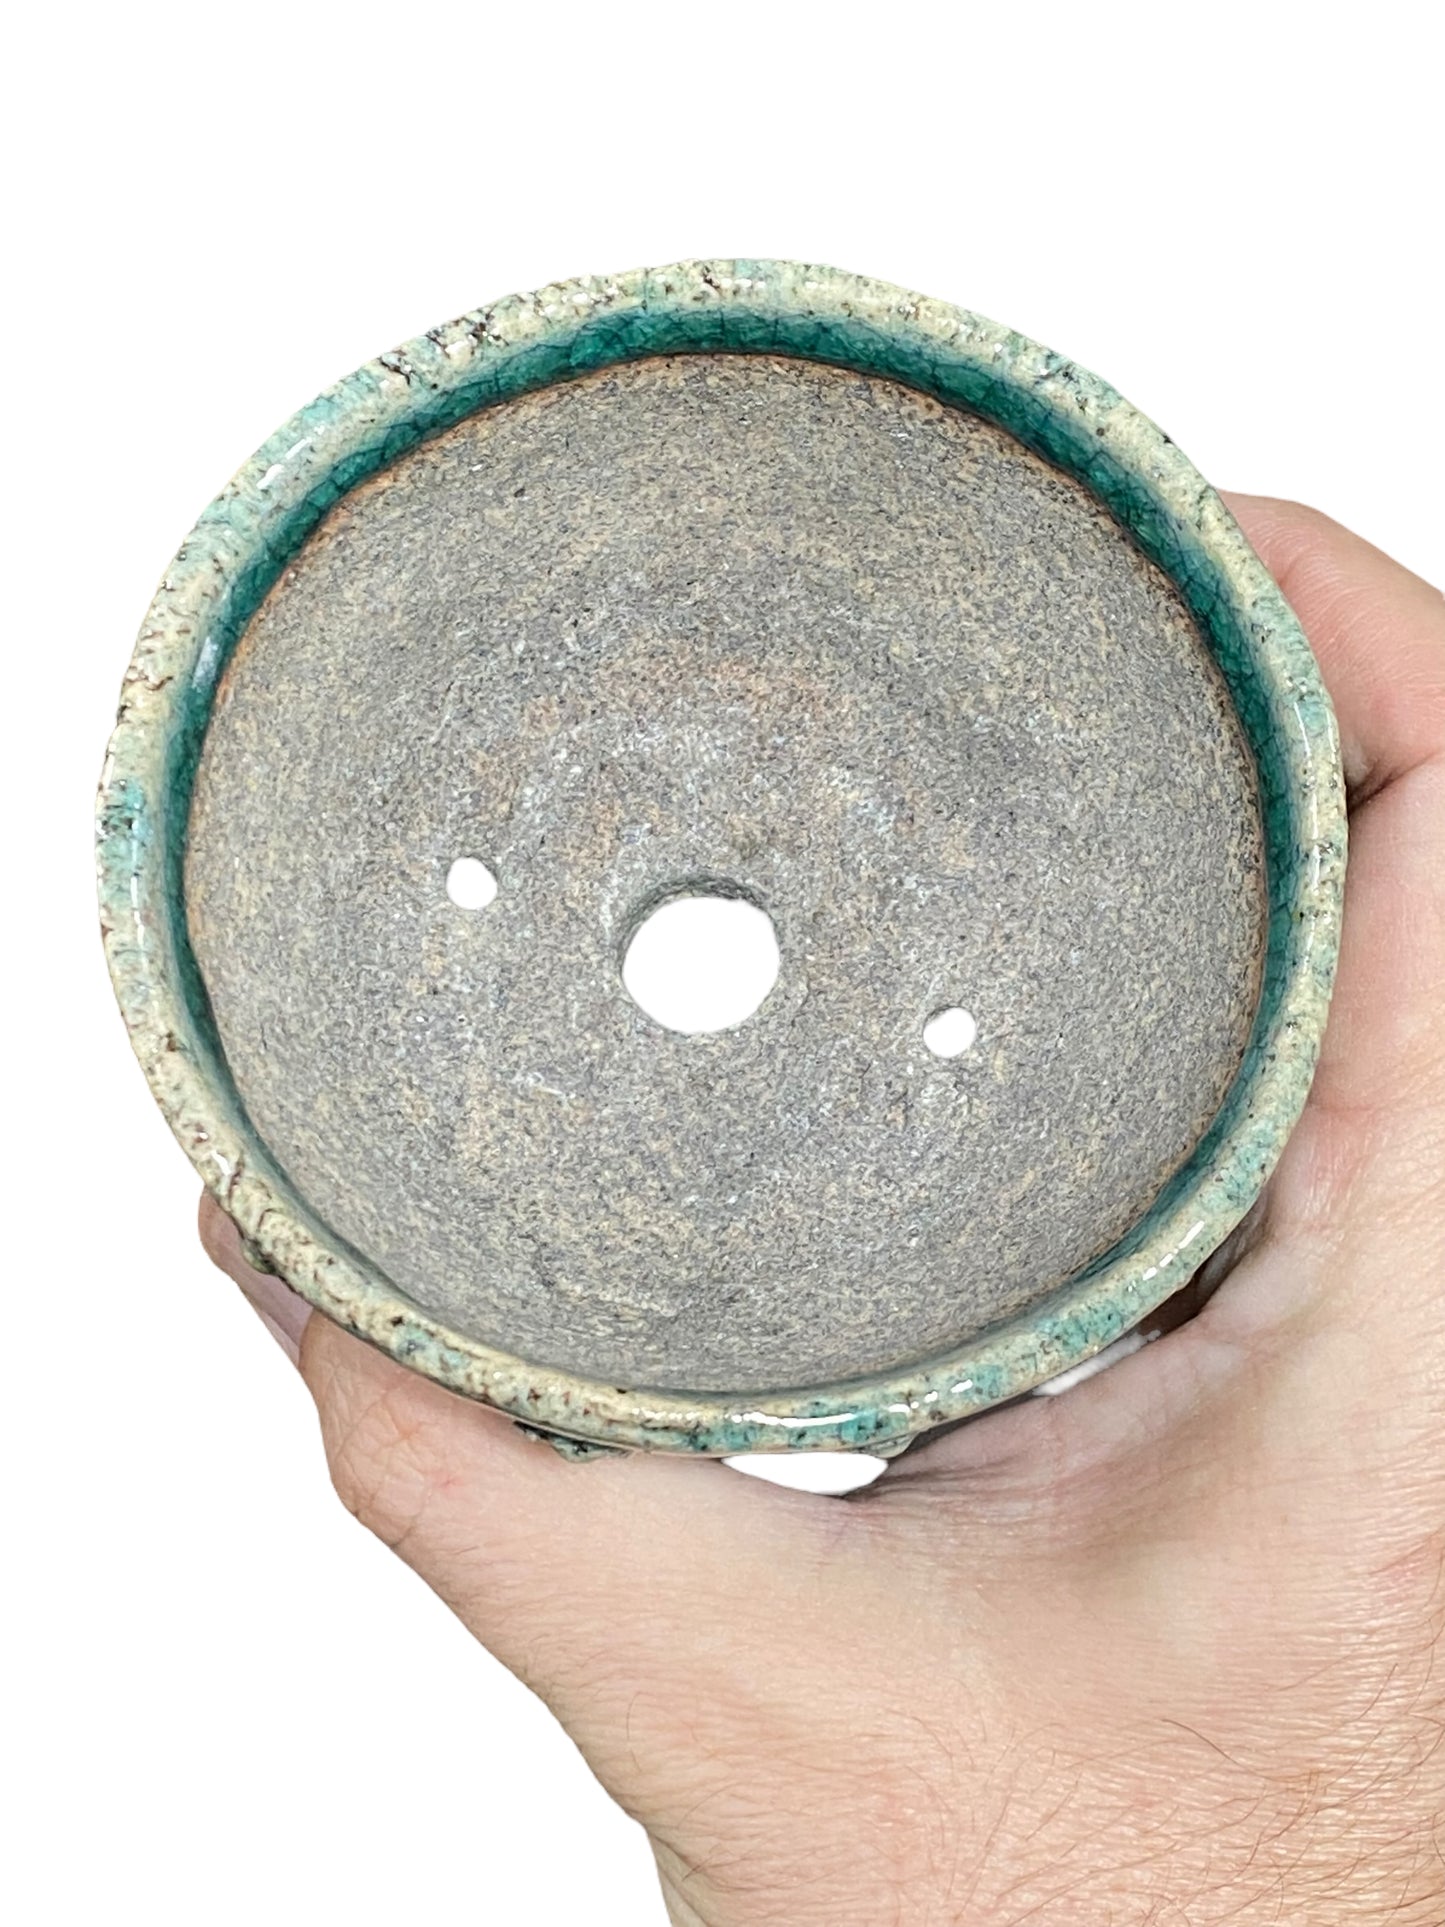 Bunzan - Riveted Crackle Glazed Round Bonsai Pot